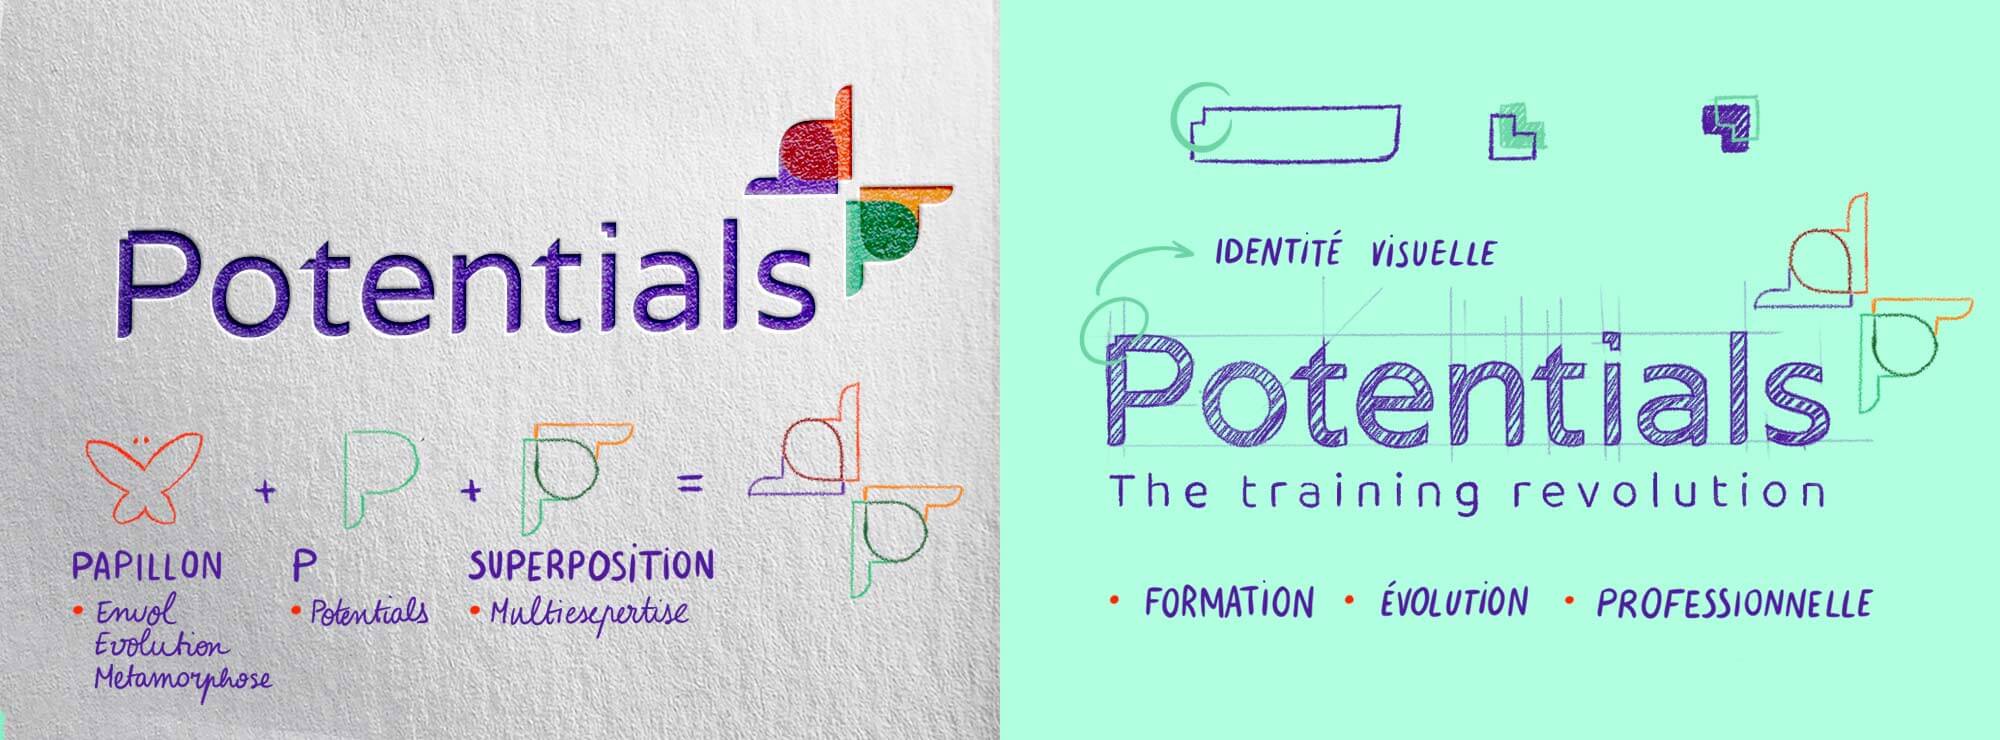 02 potentials formation professionnelle visual identity logo illustration mockup explication.jpg